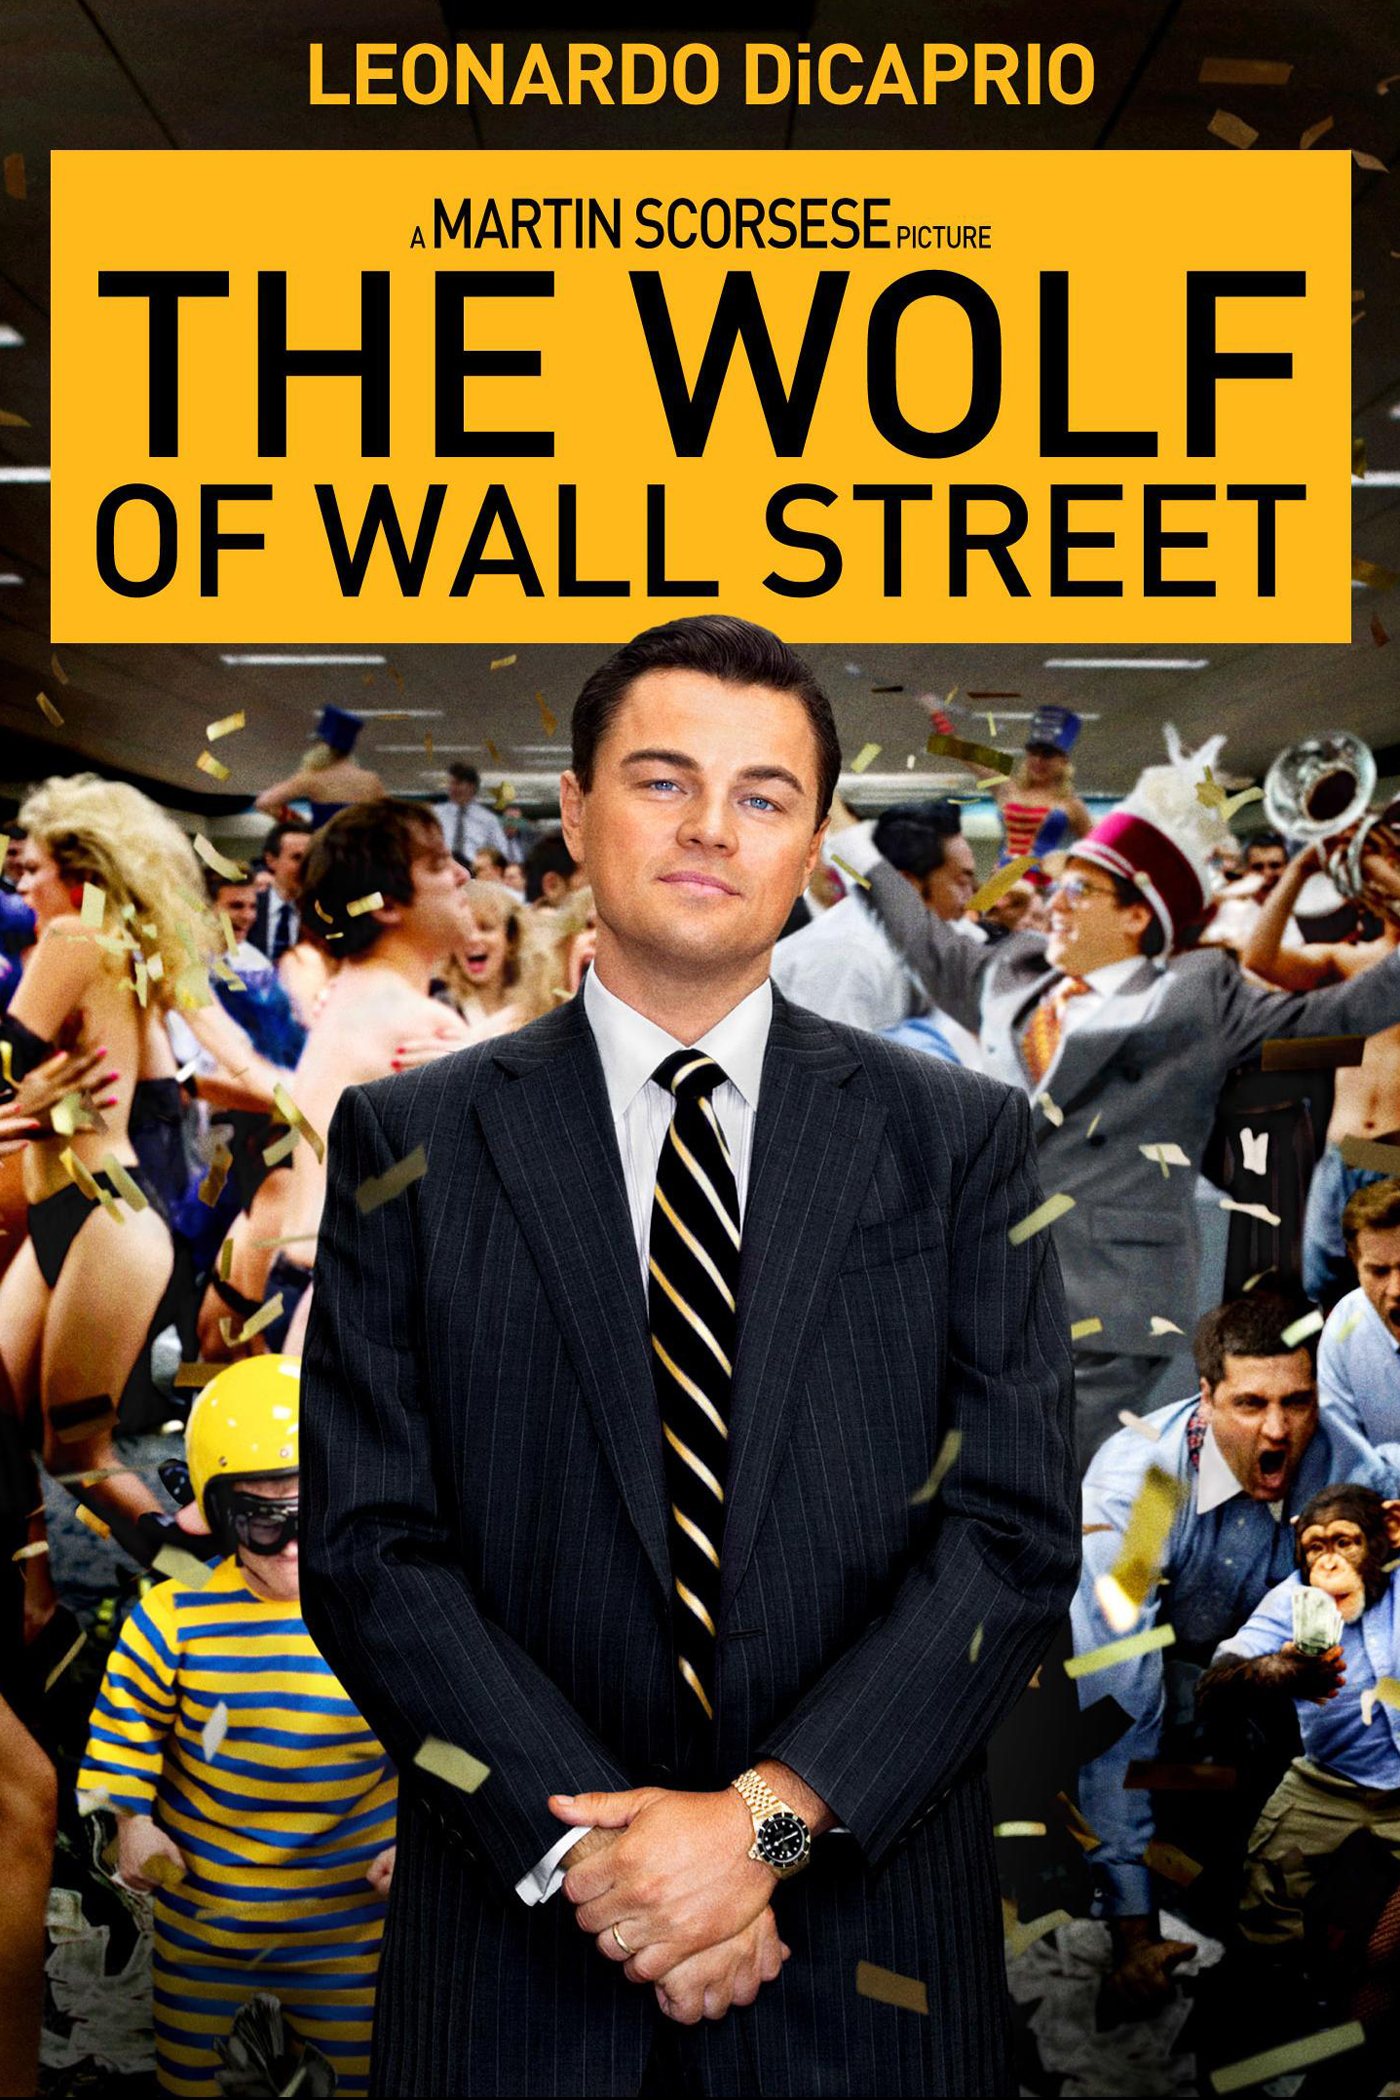 TheWolfofWallStreet-poster.jpg